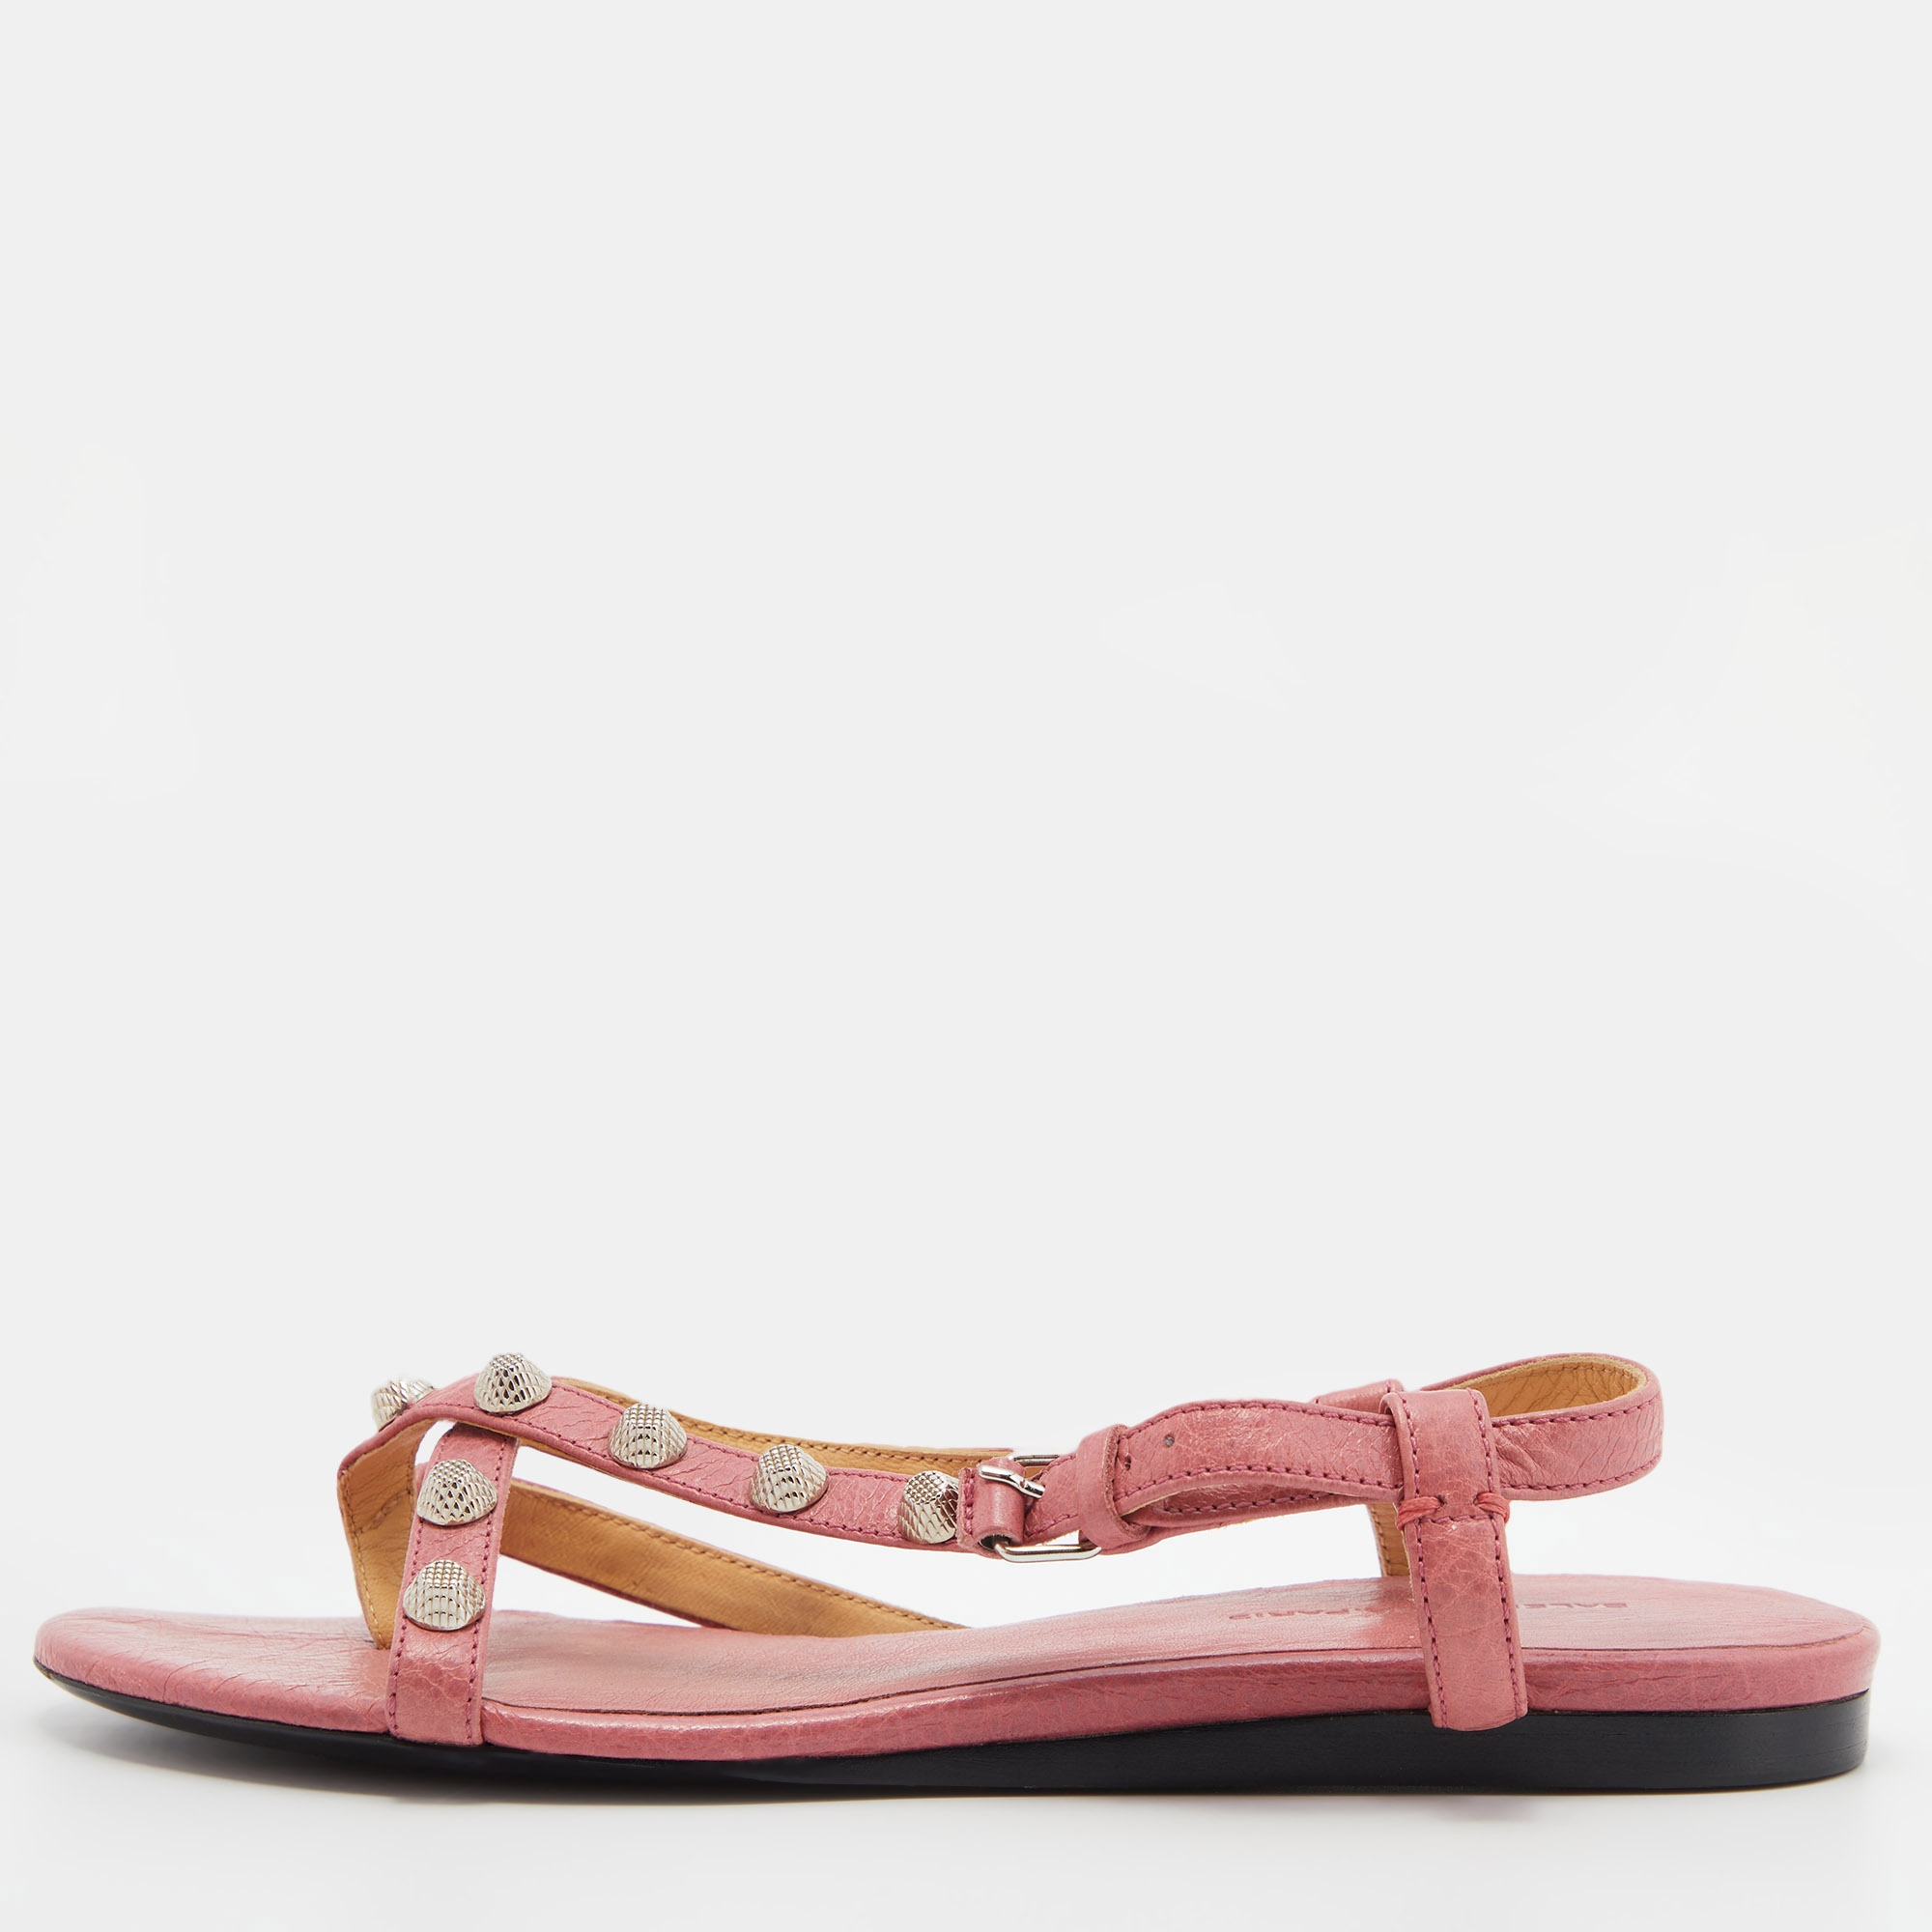 Balenciaga pink leather arena flat sandals size 36